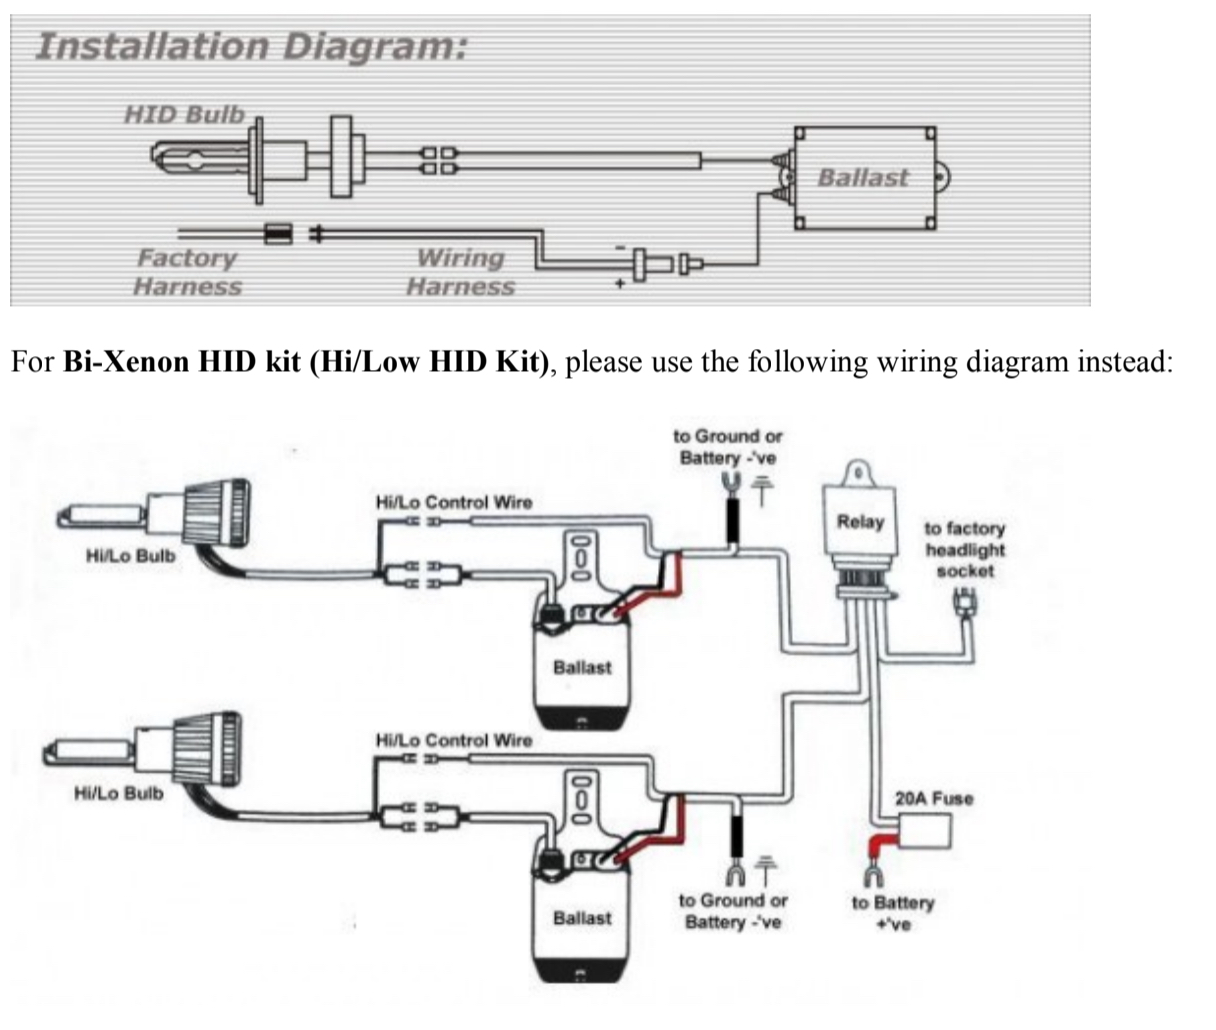 D1S Xenon HID Headlight Bulb - Installation Guide 